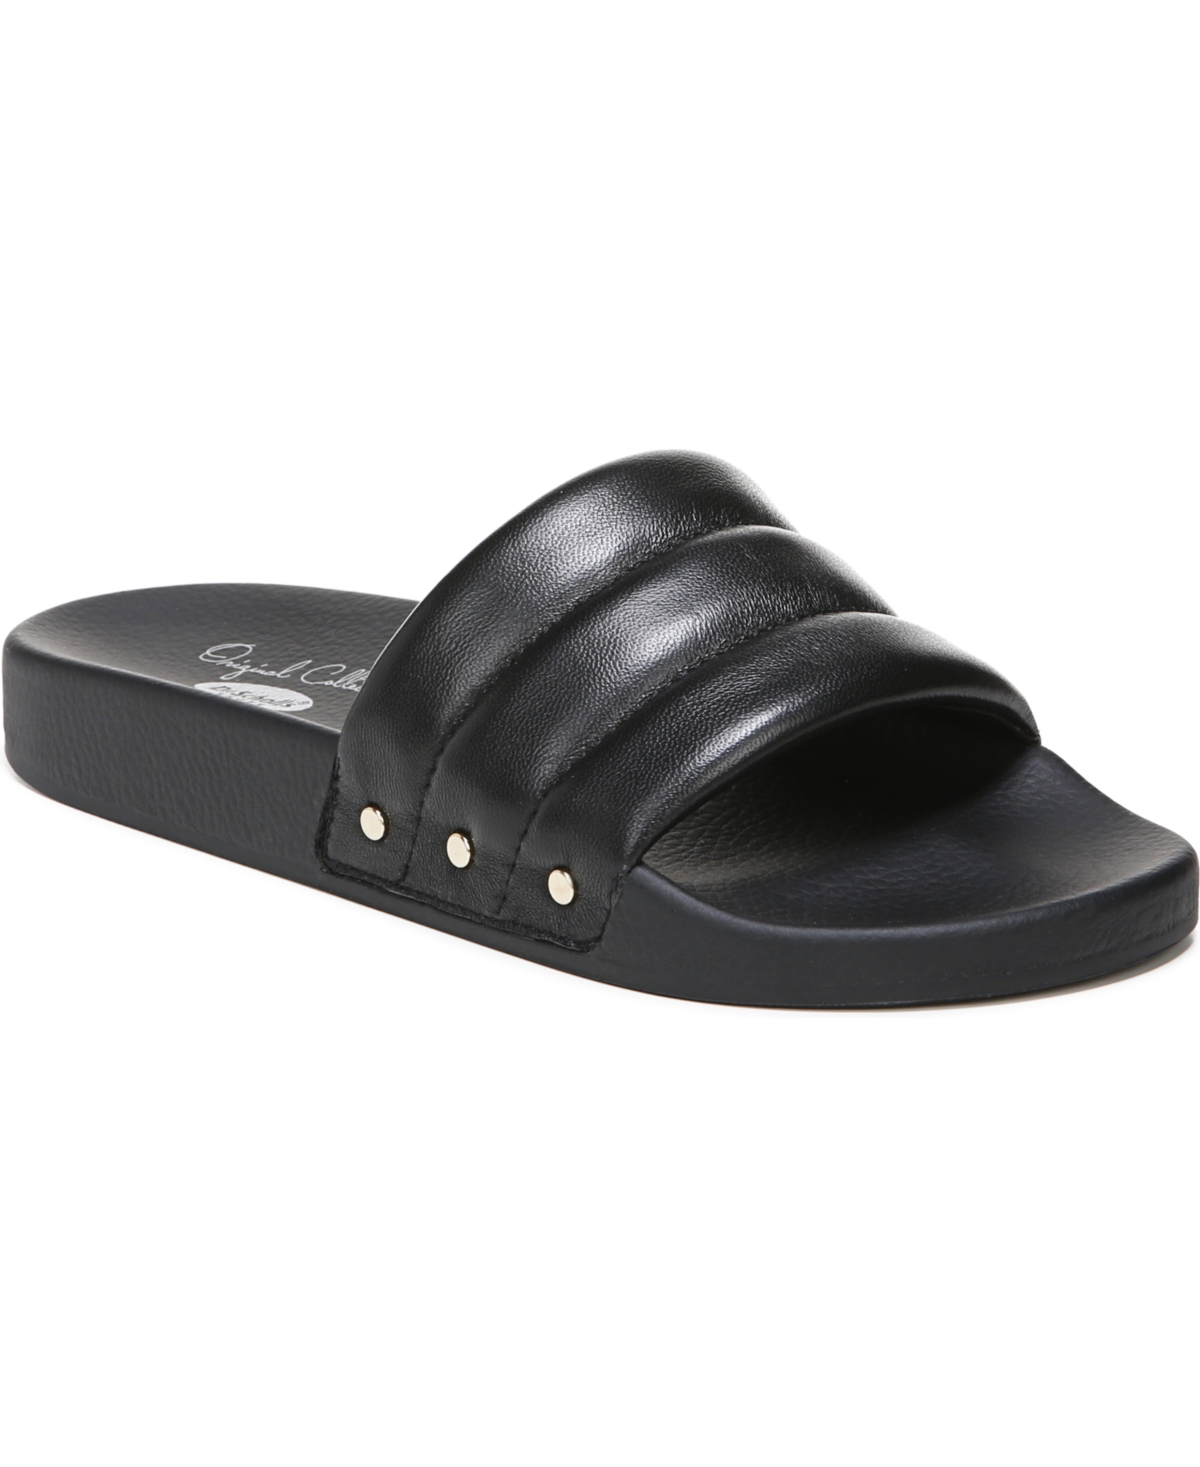 Dr. Scholl's Original Collection Women's Pisces Chill Water-resistant Slides Women's Shoes